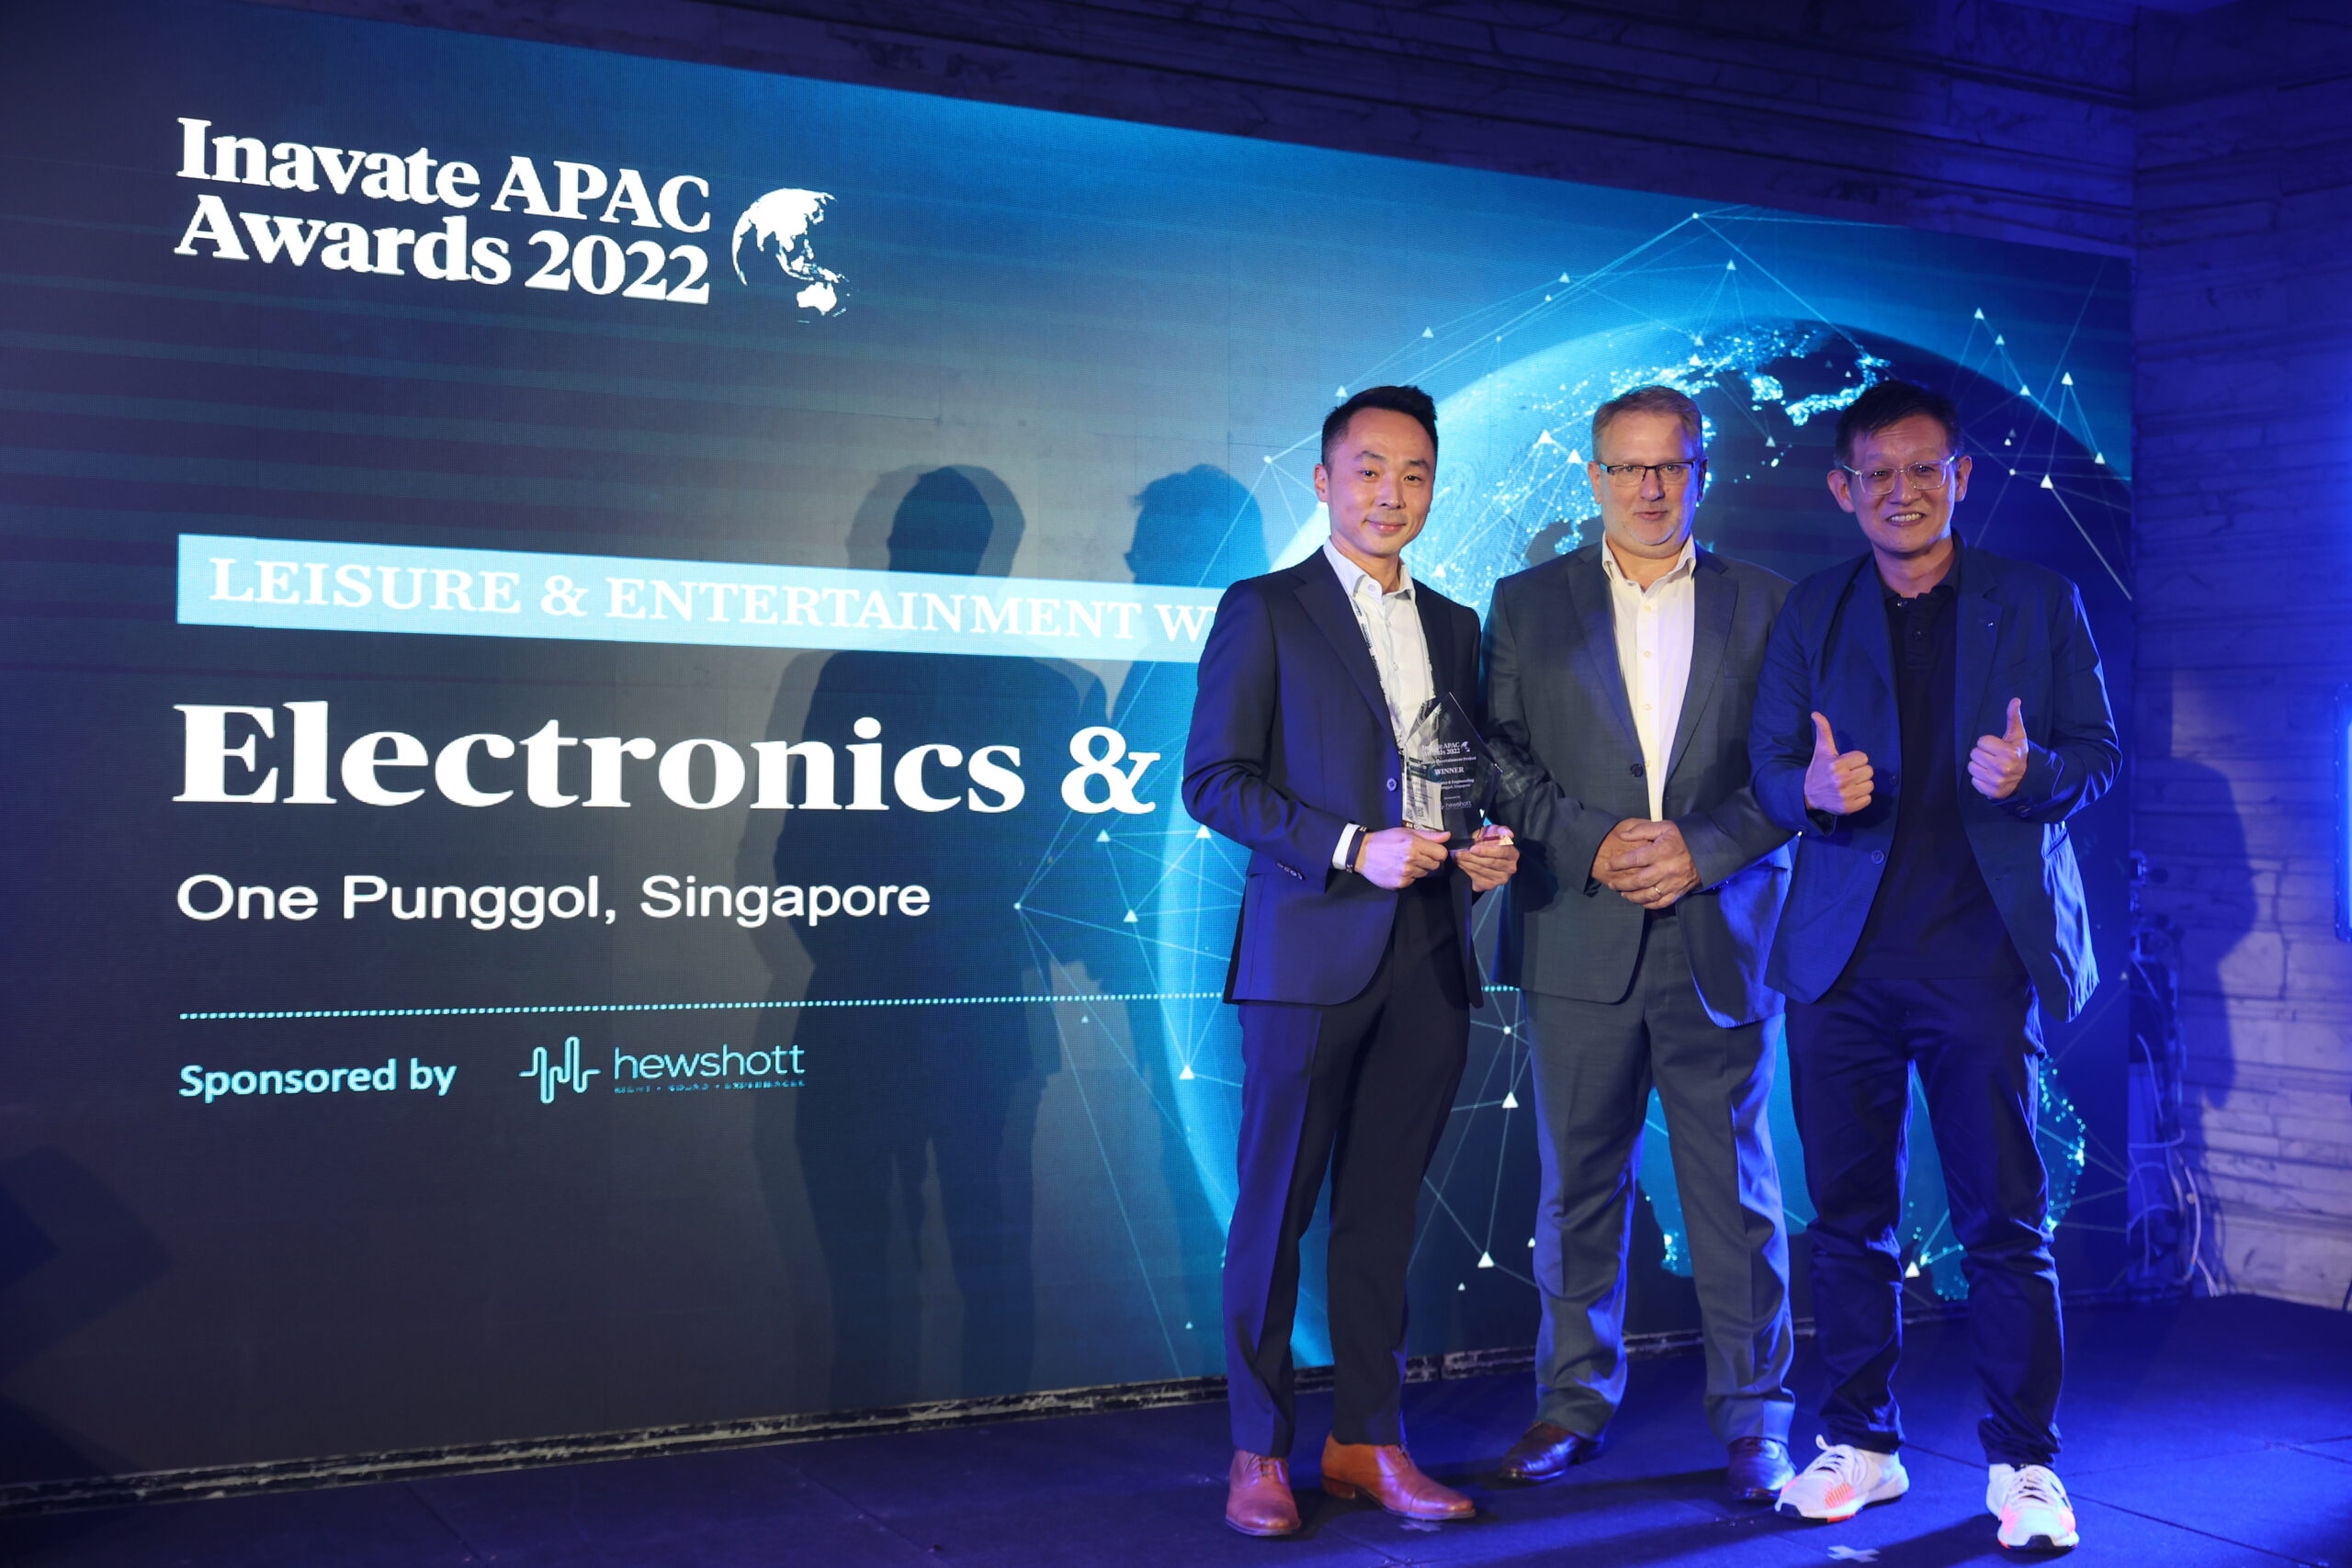 E&E Wins InAVation Award 2022 for One Punggol